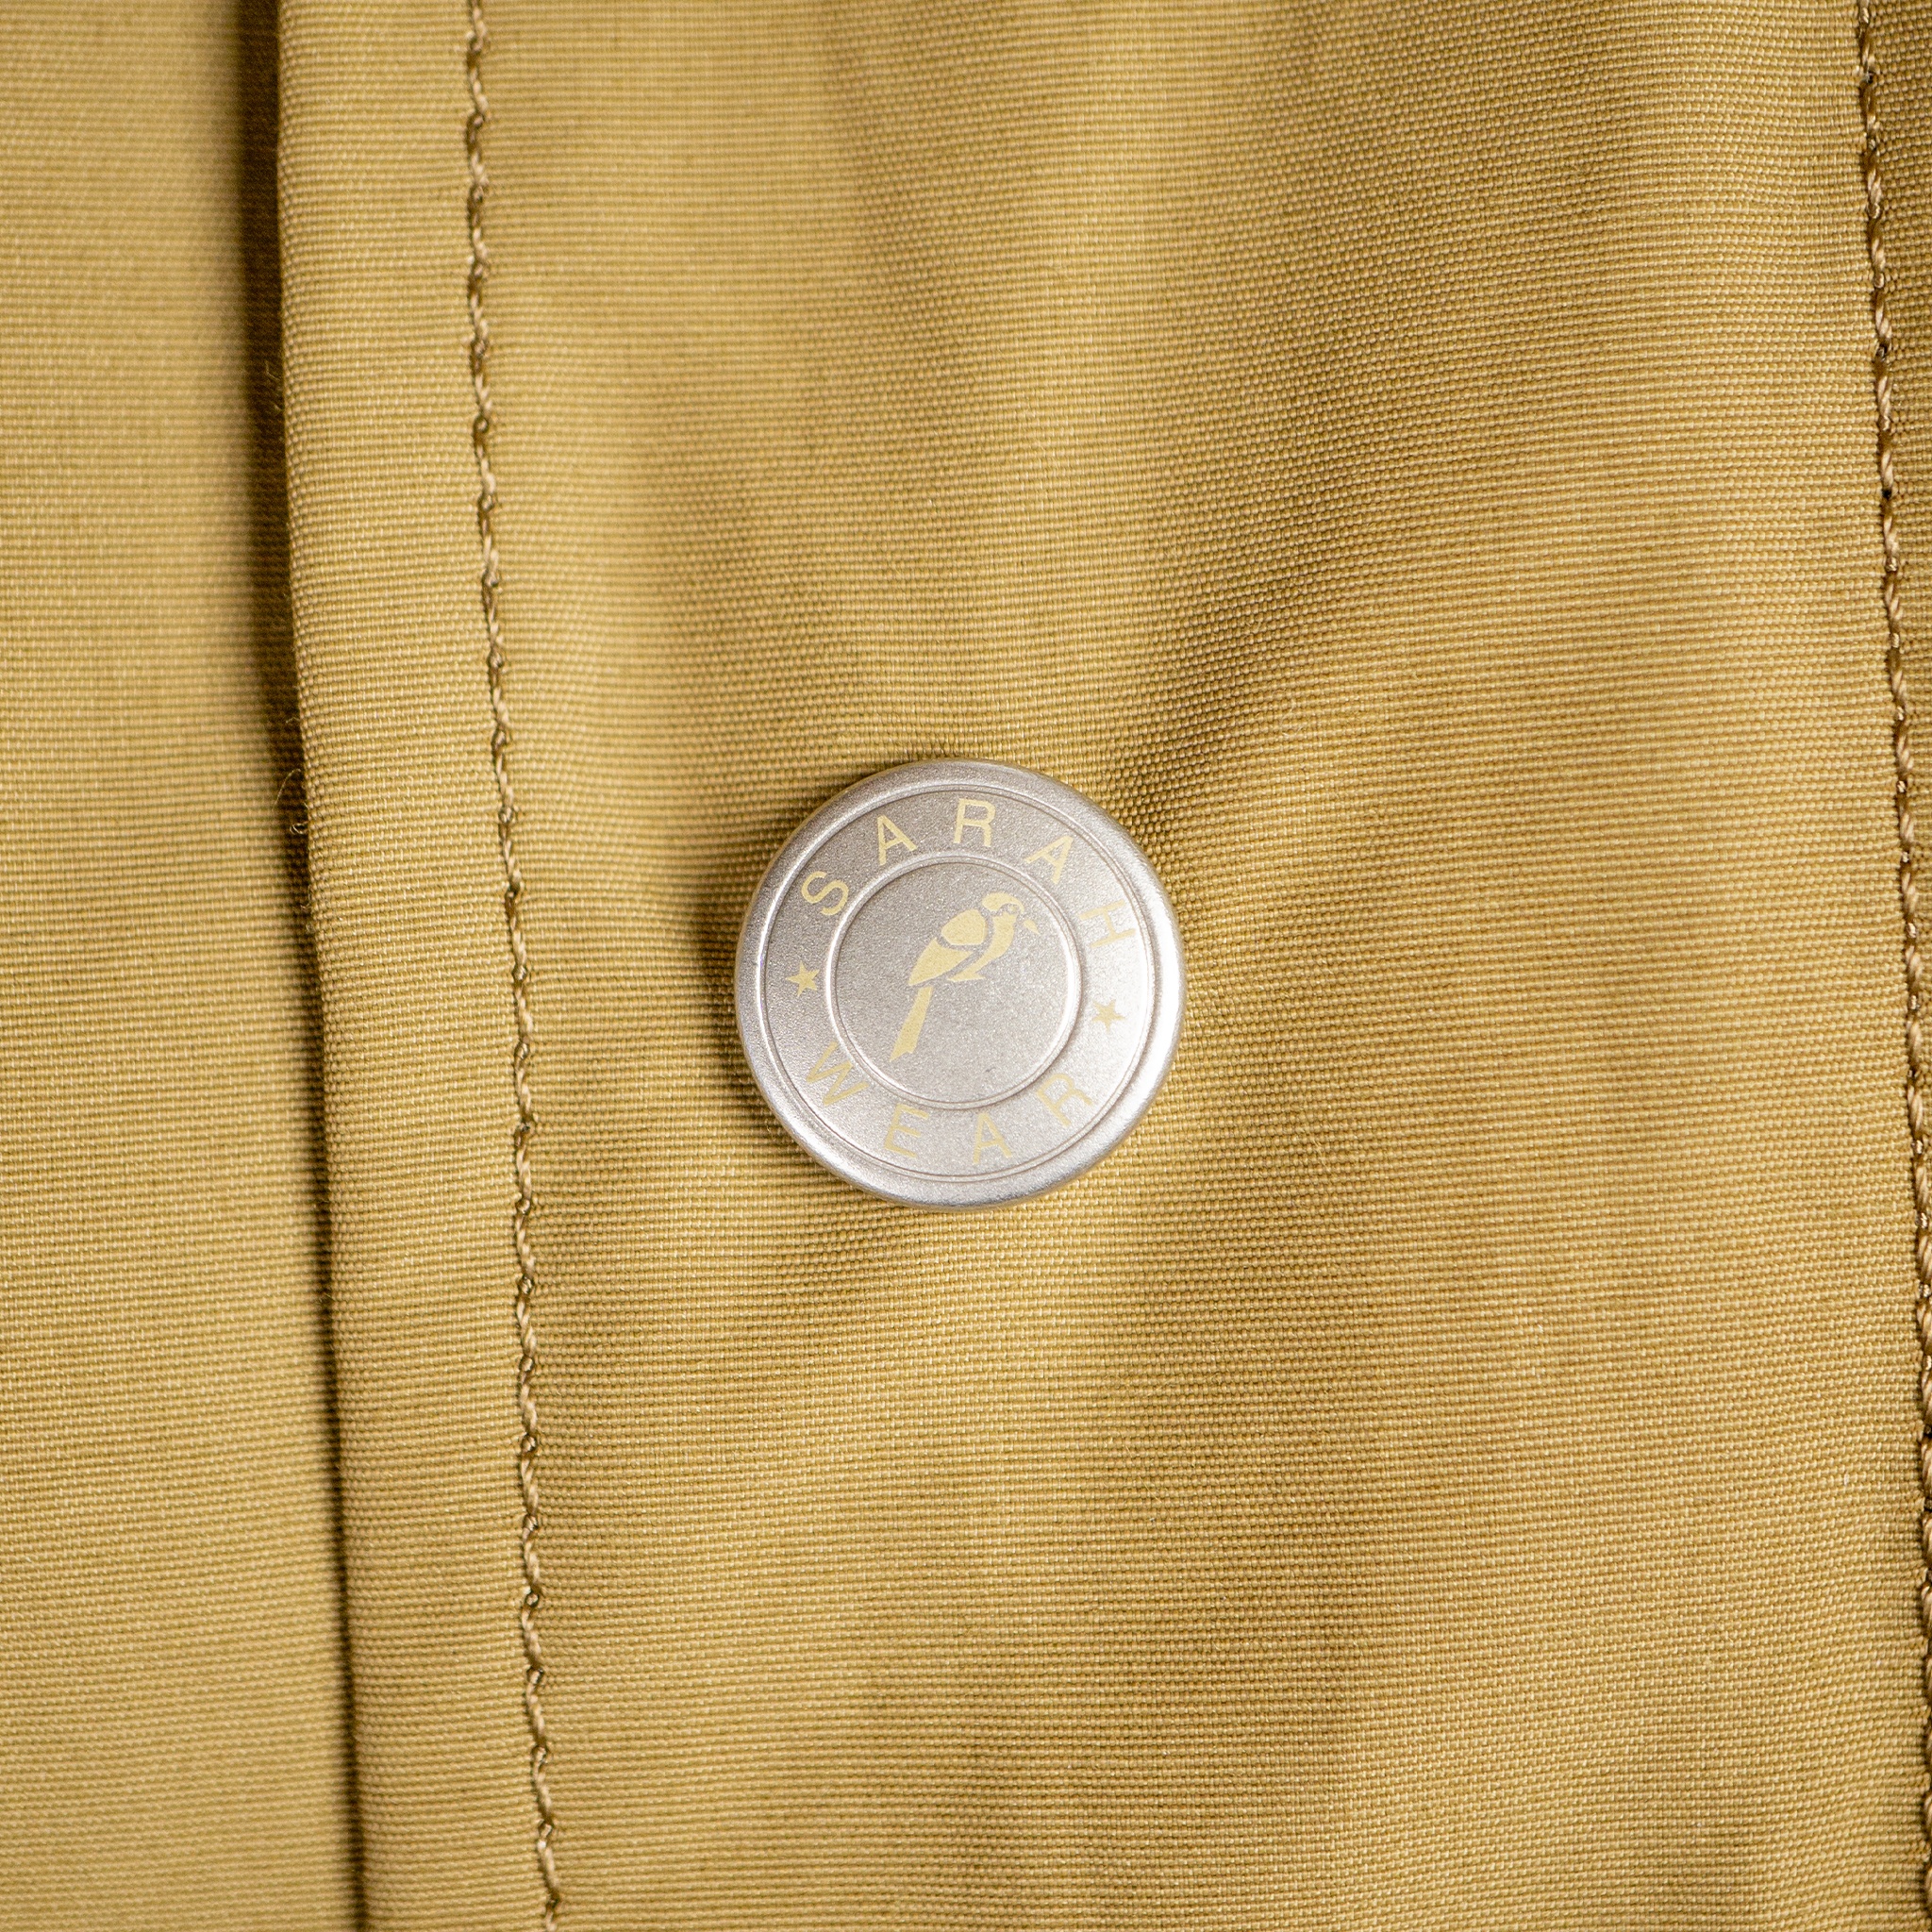 SARAHWEARのブランドロゴがプリントされたボタン